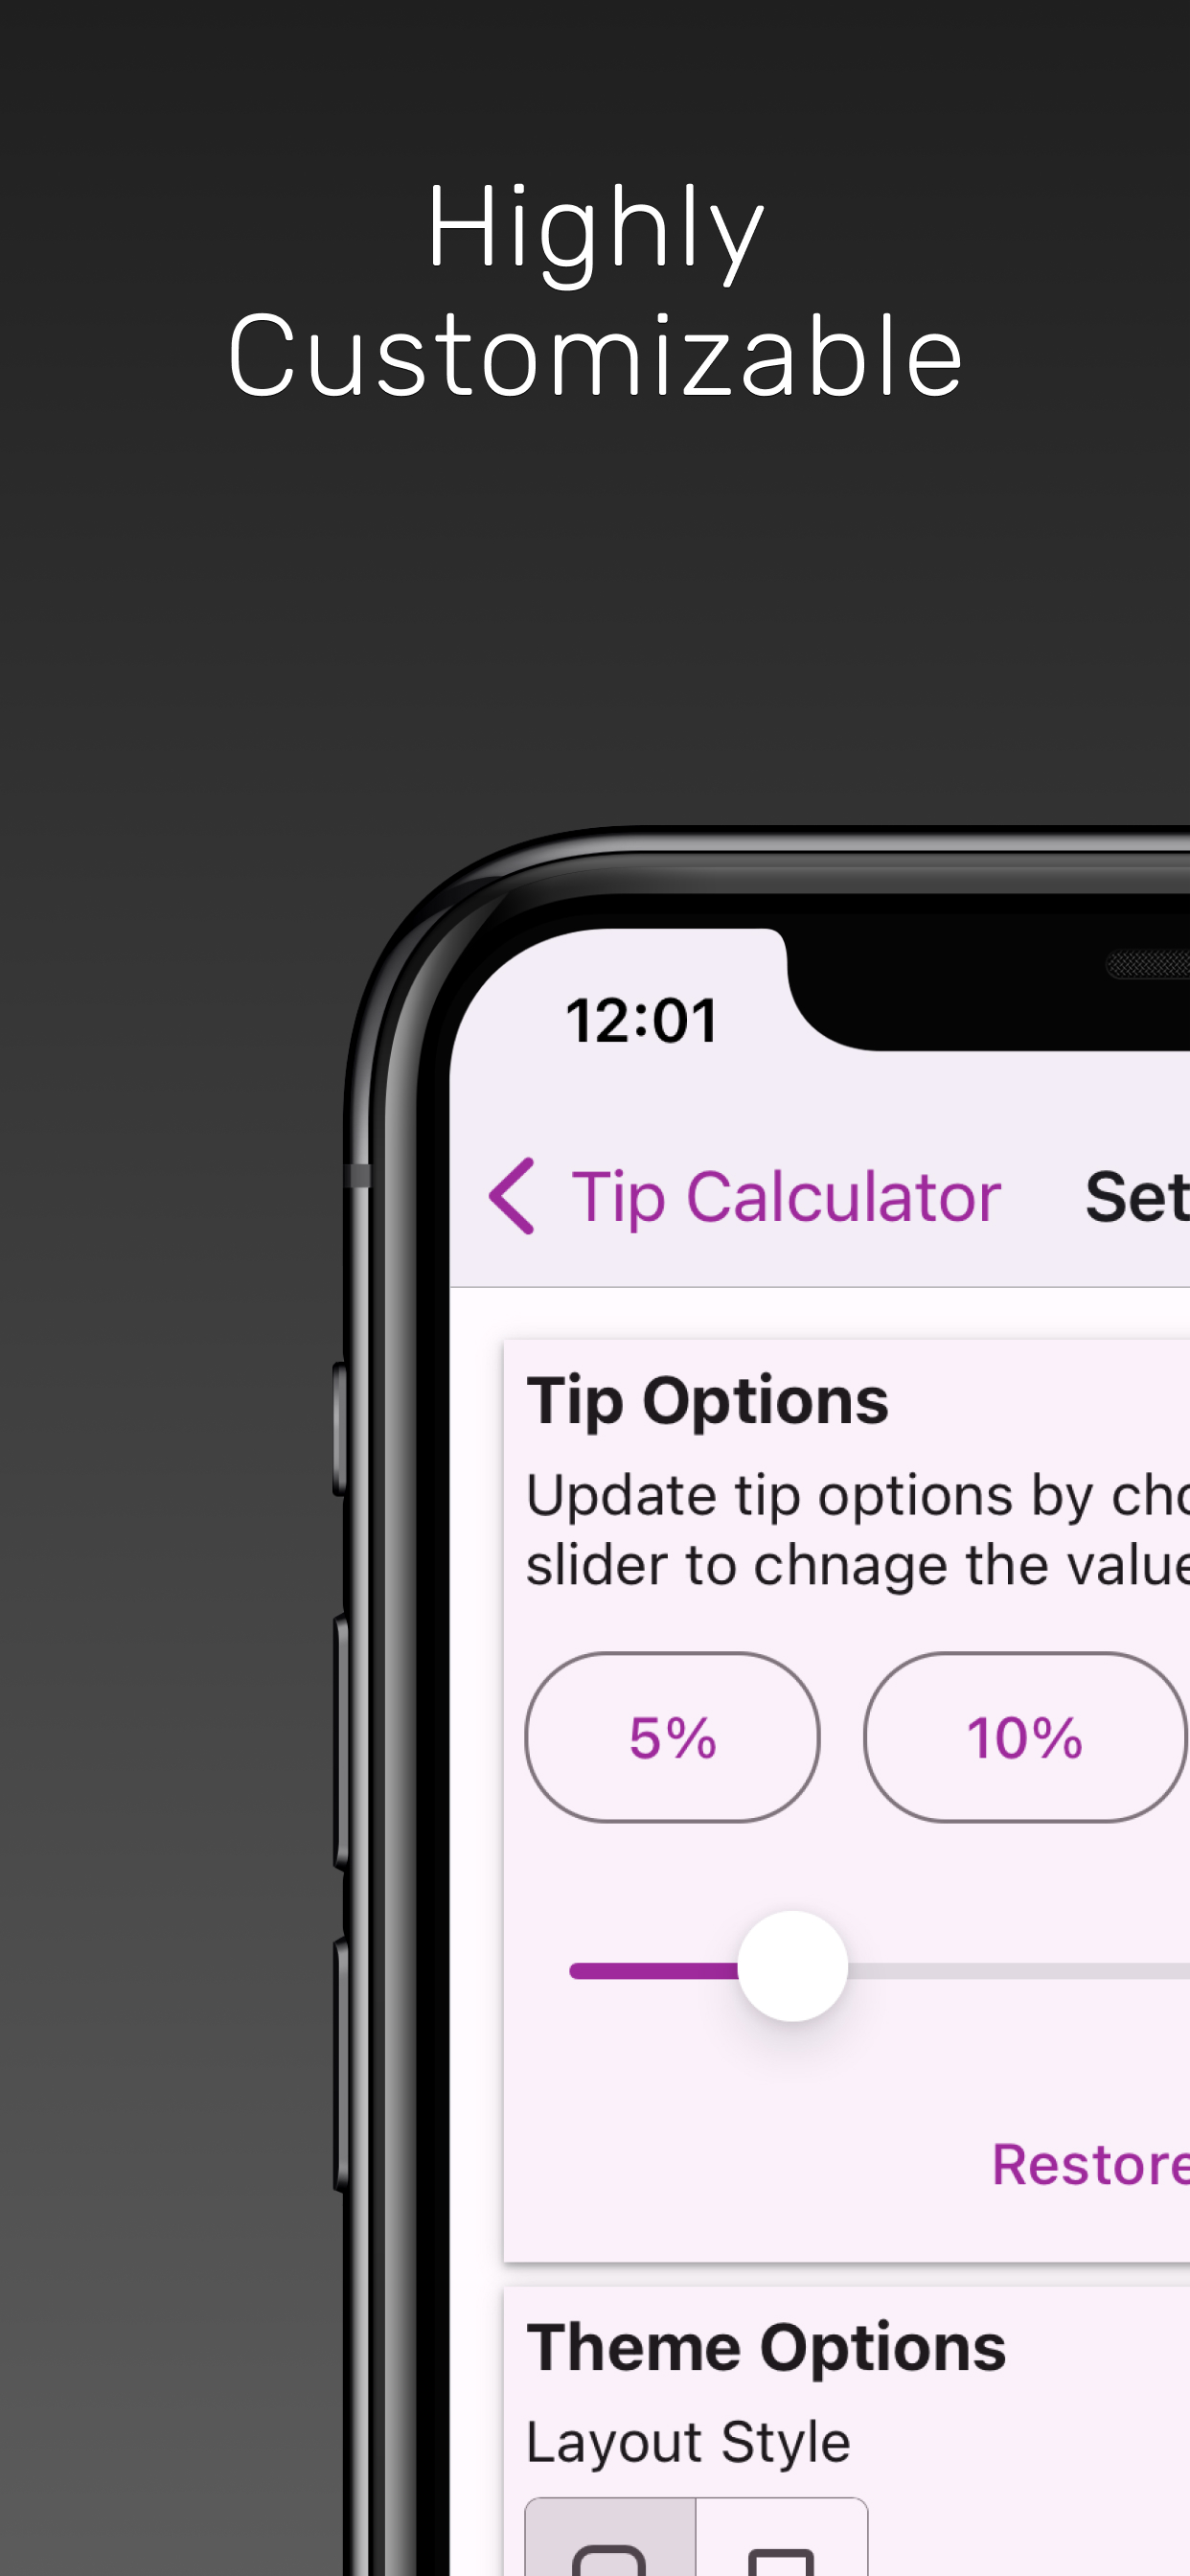 Screenshot of the Easy Tip Calculator app